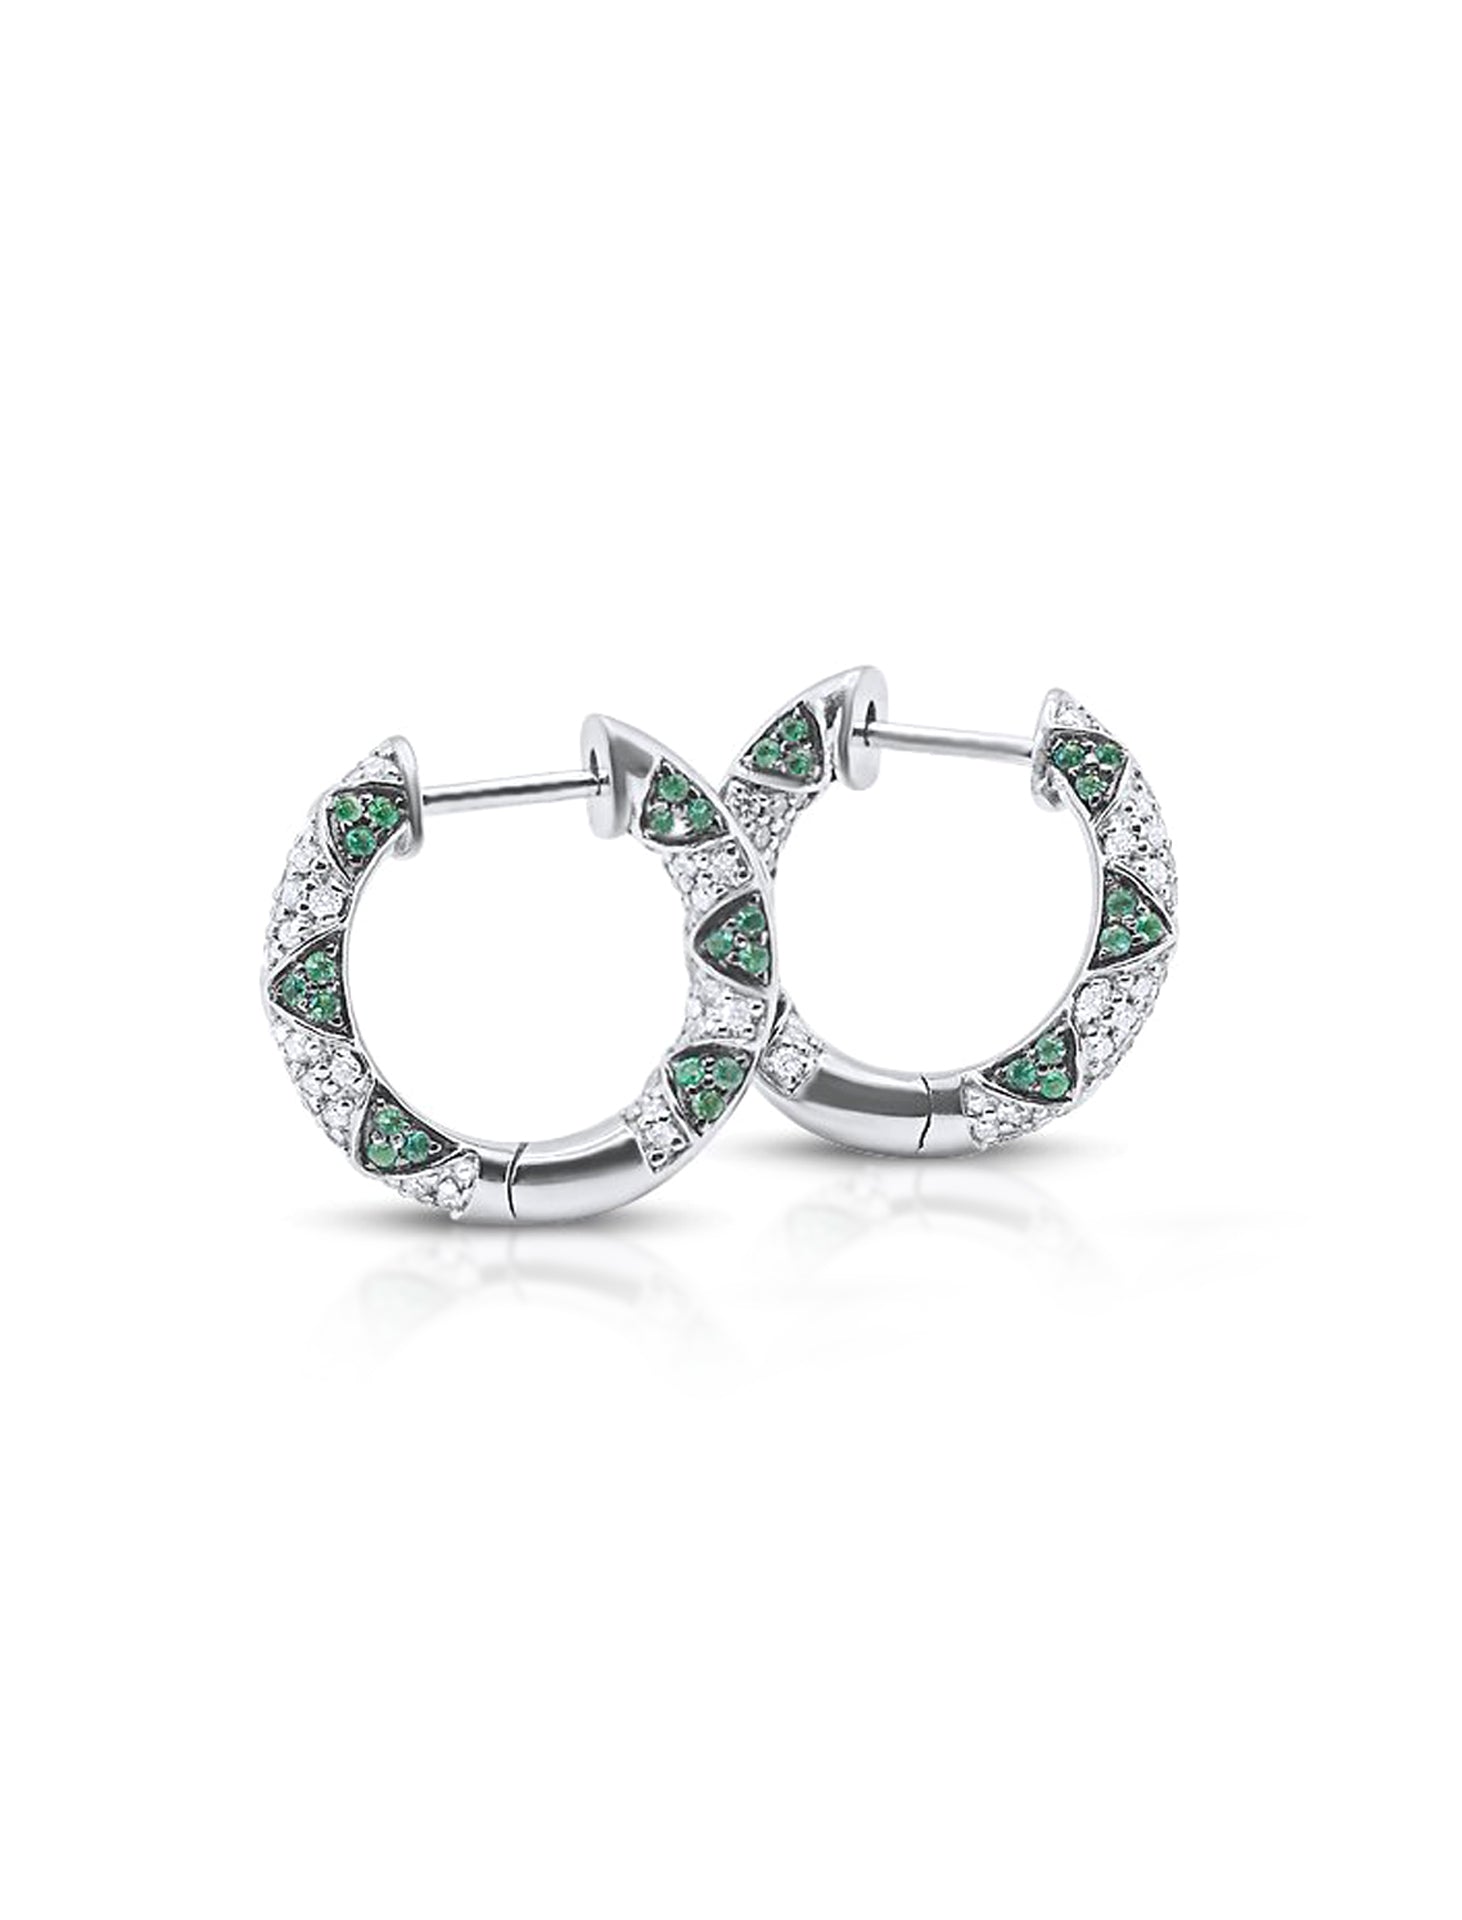 Lotus Inside Out, Emerald Petals + Diamond Pavé Earrings